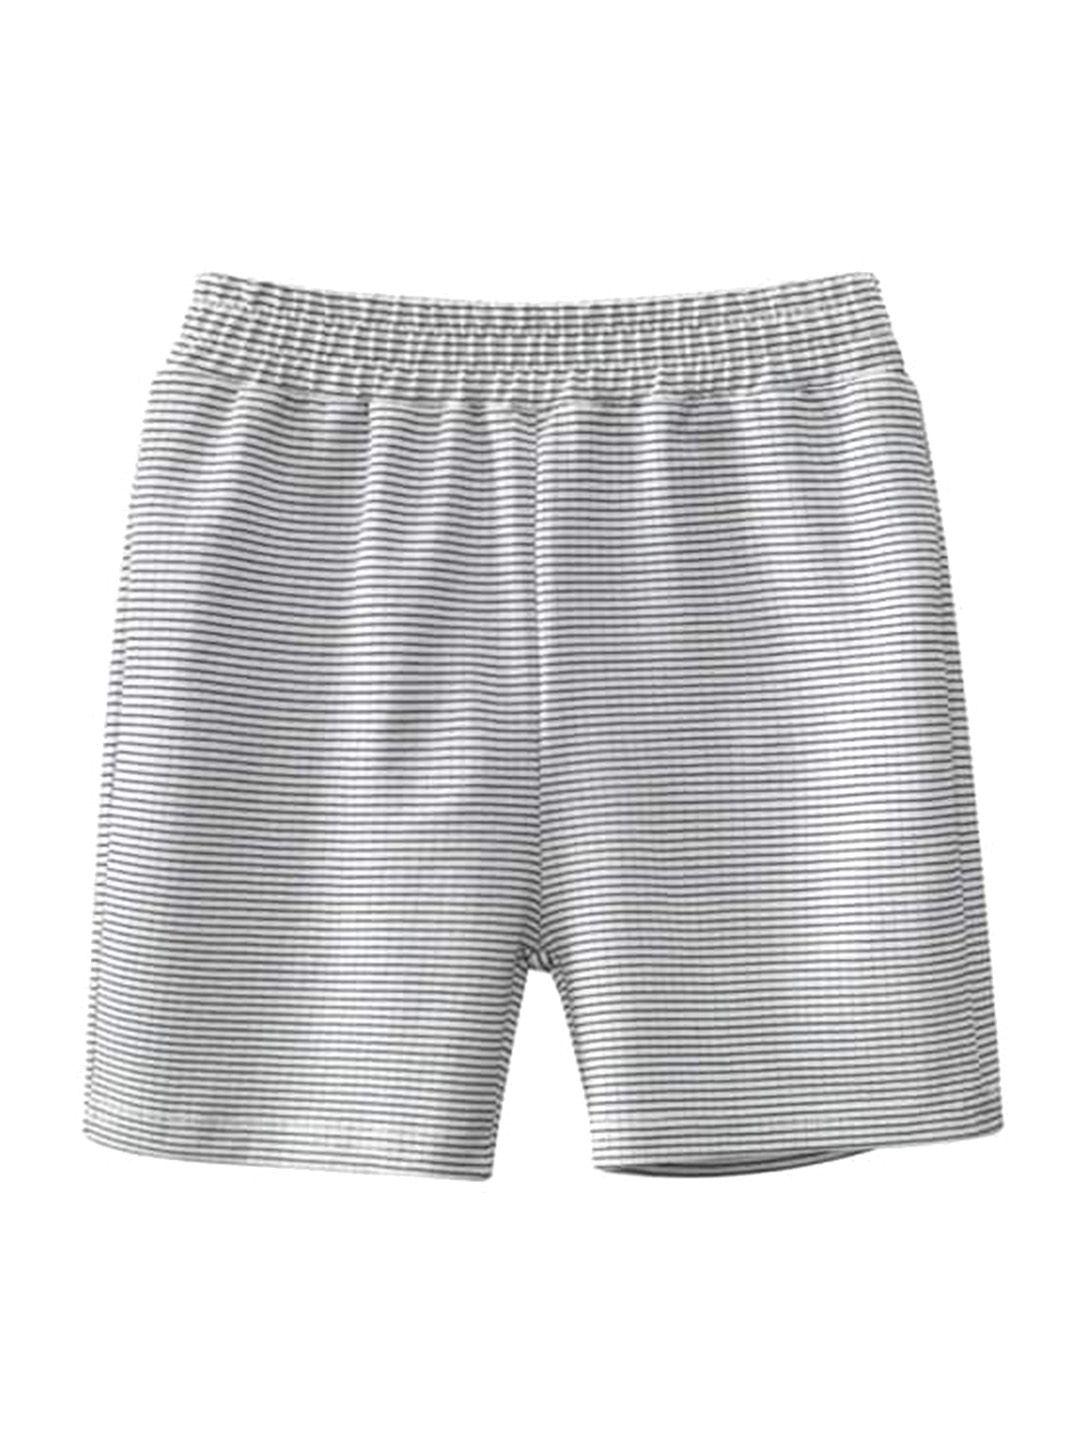 stylecast boys grey mid-rise striped rapid-dry cotton shorts